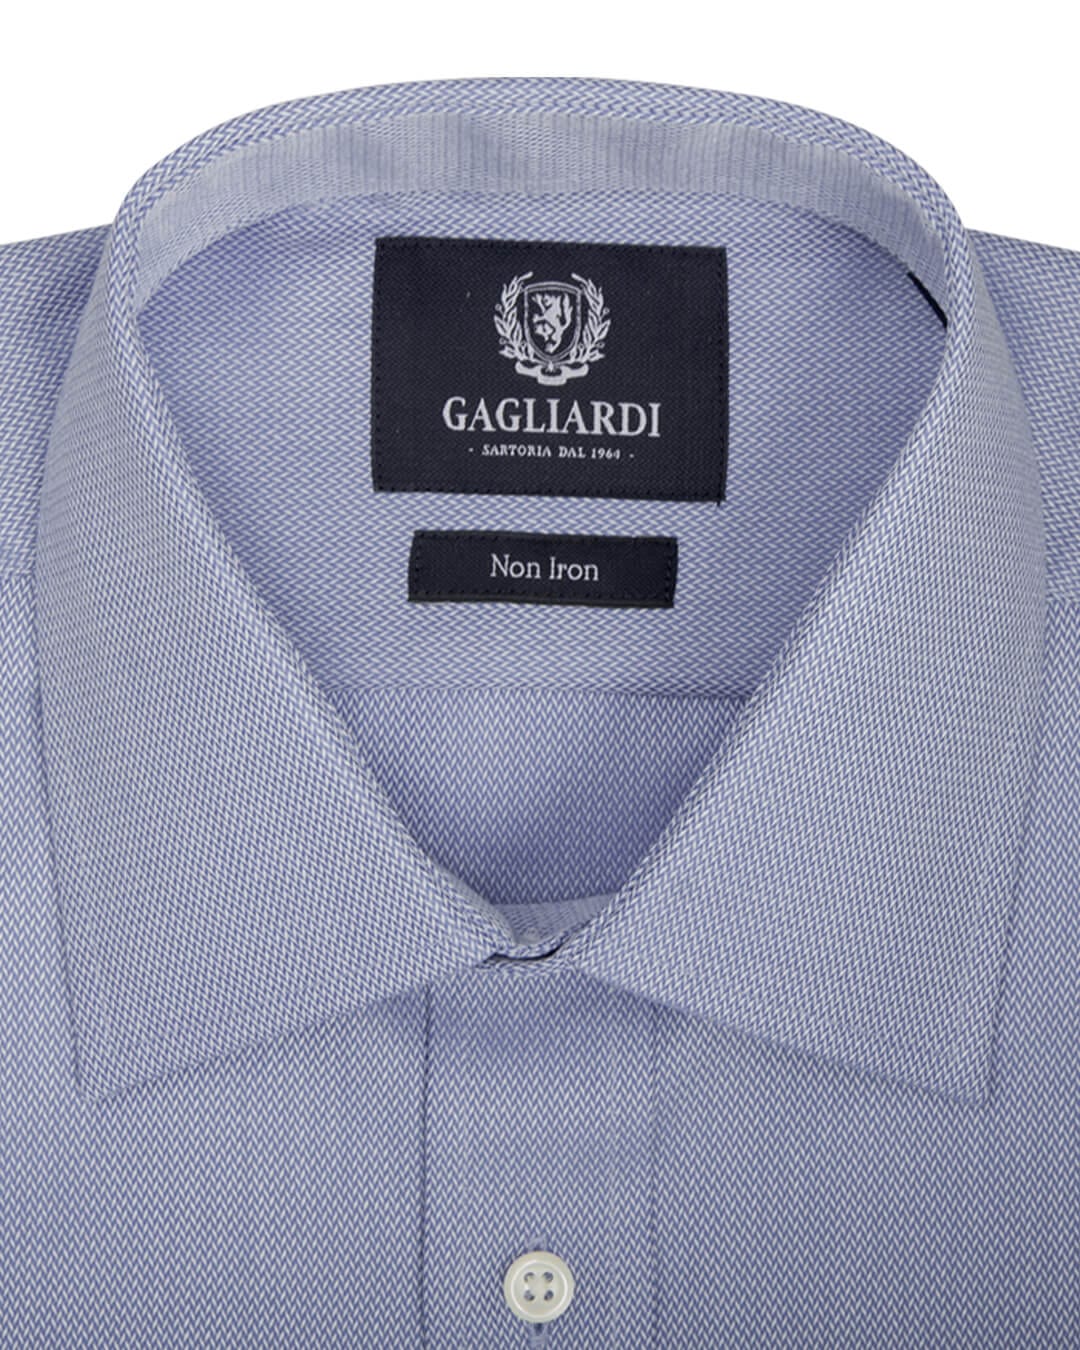 Gagliardi Shirts Mid Blue Chevron Tailored Fit Classic Collar Shirt